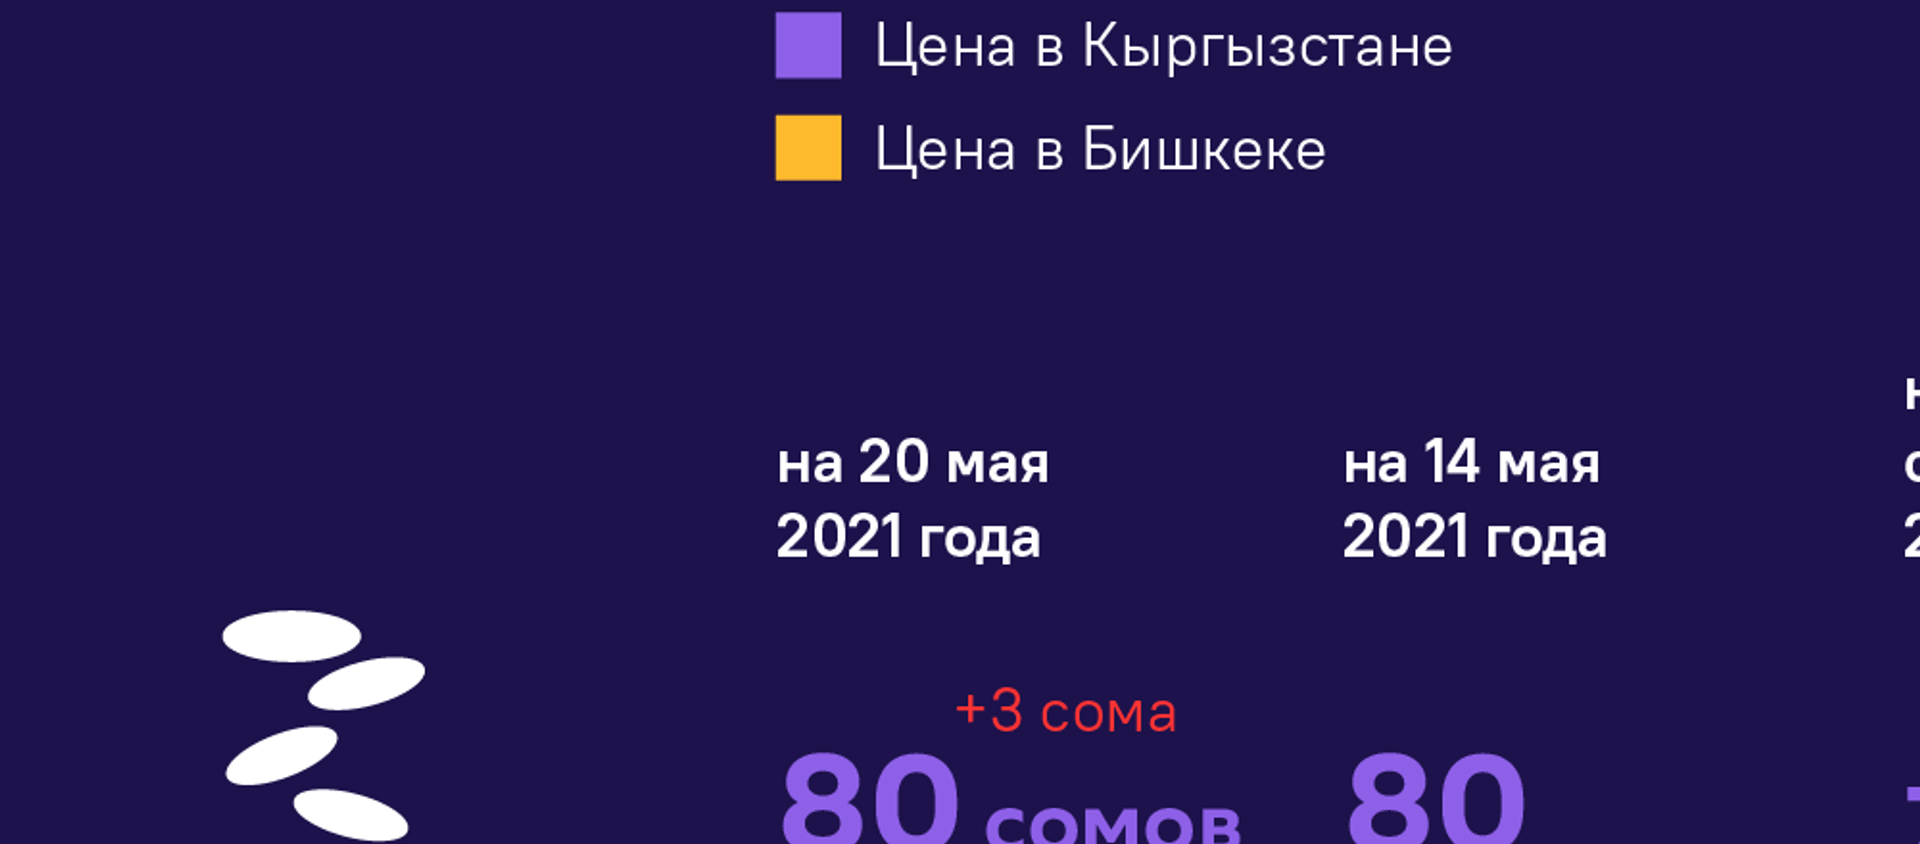 Цены на продуктны 20.05.21 - Sputnik Кыргызстан, 1920, 21.05.2021